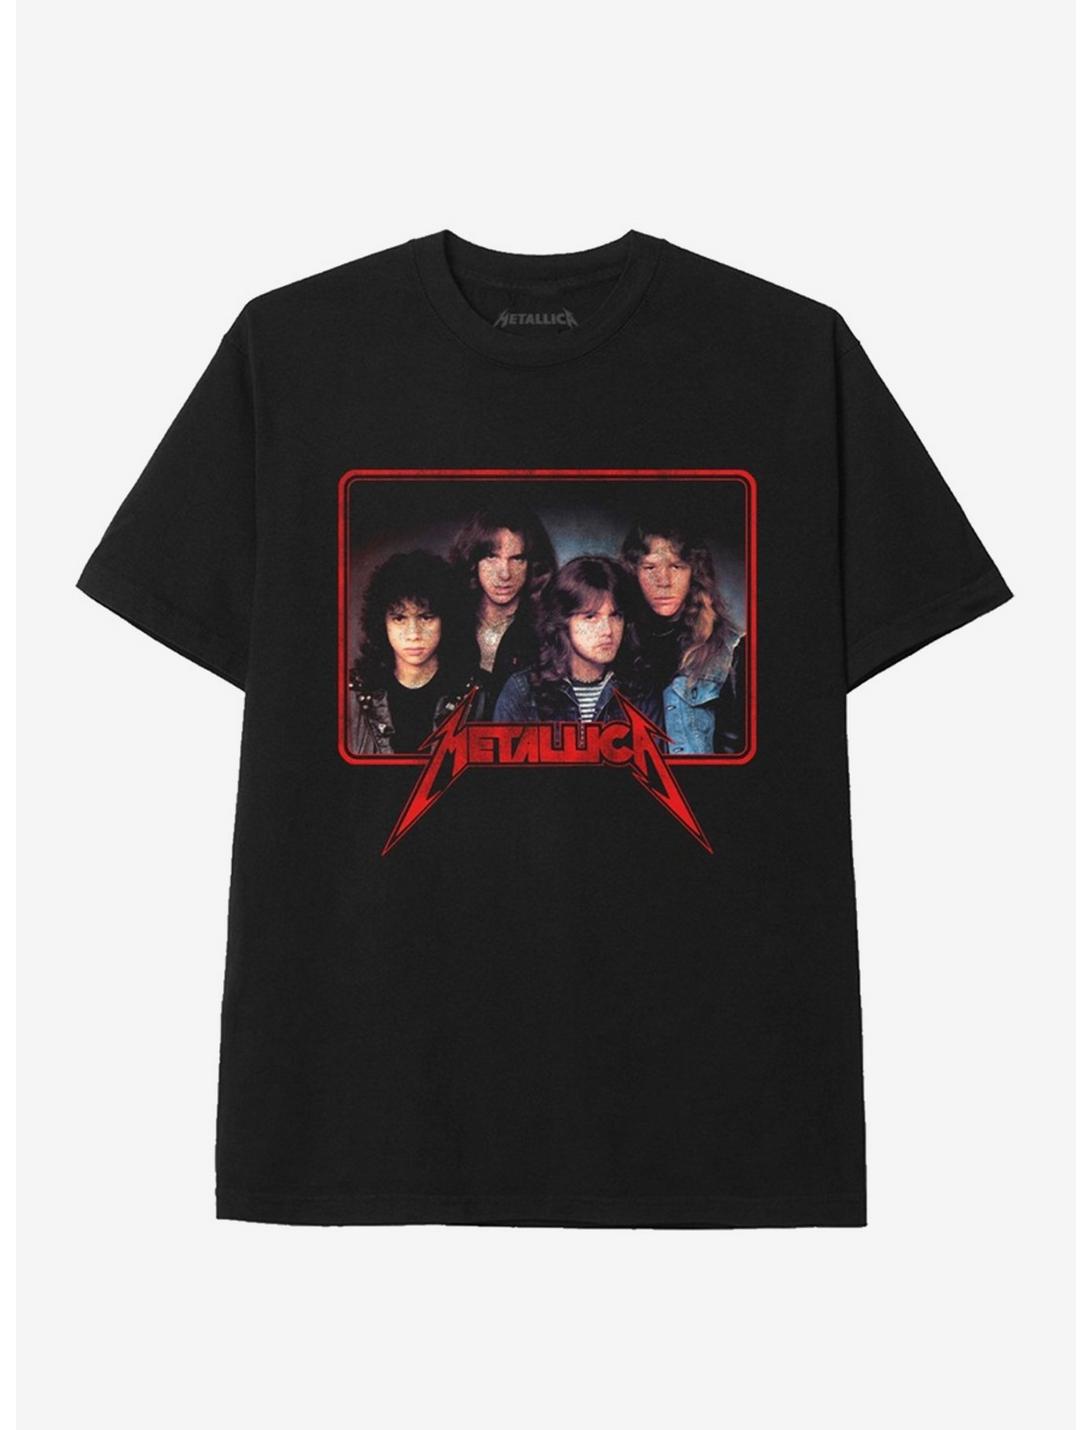 Metallica Vintage Photo T-Shirt, BLACK, hi-res